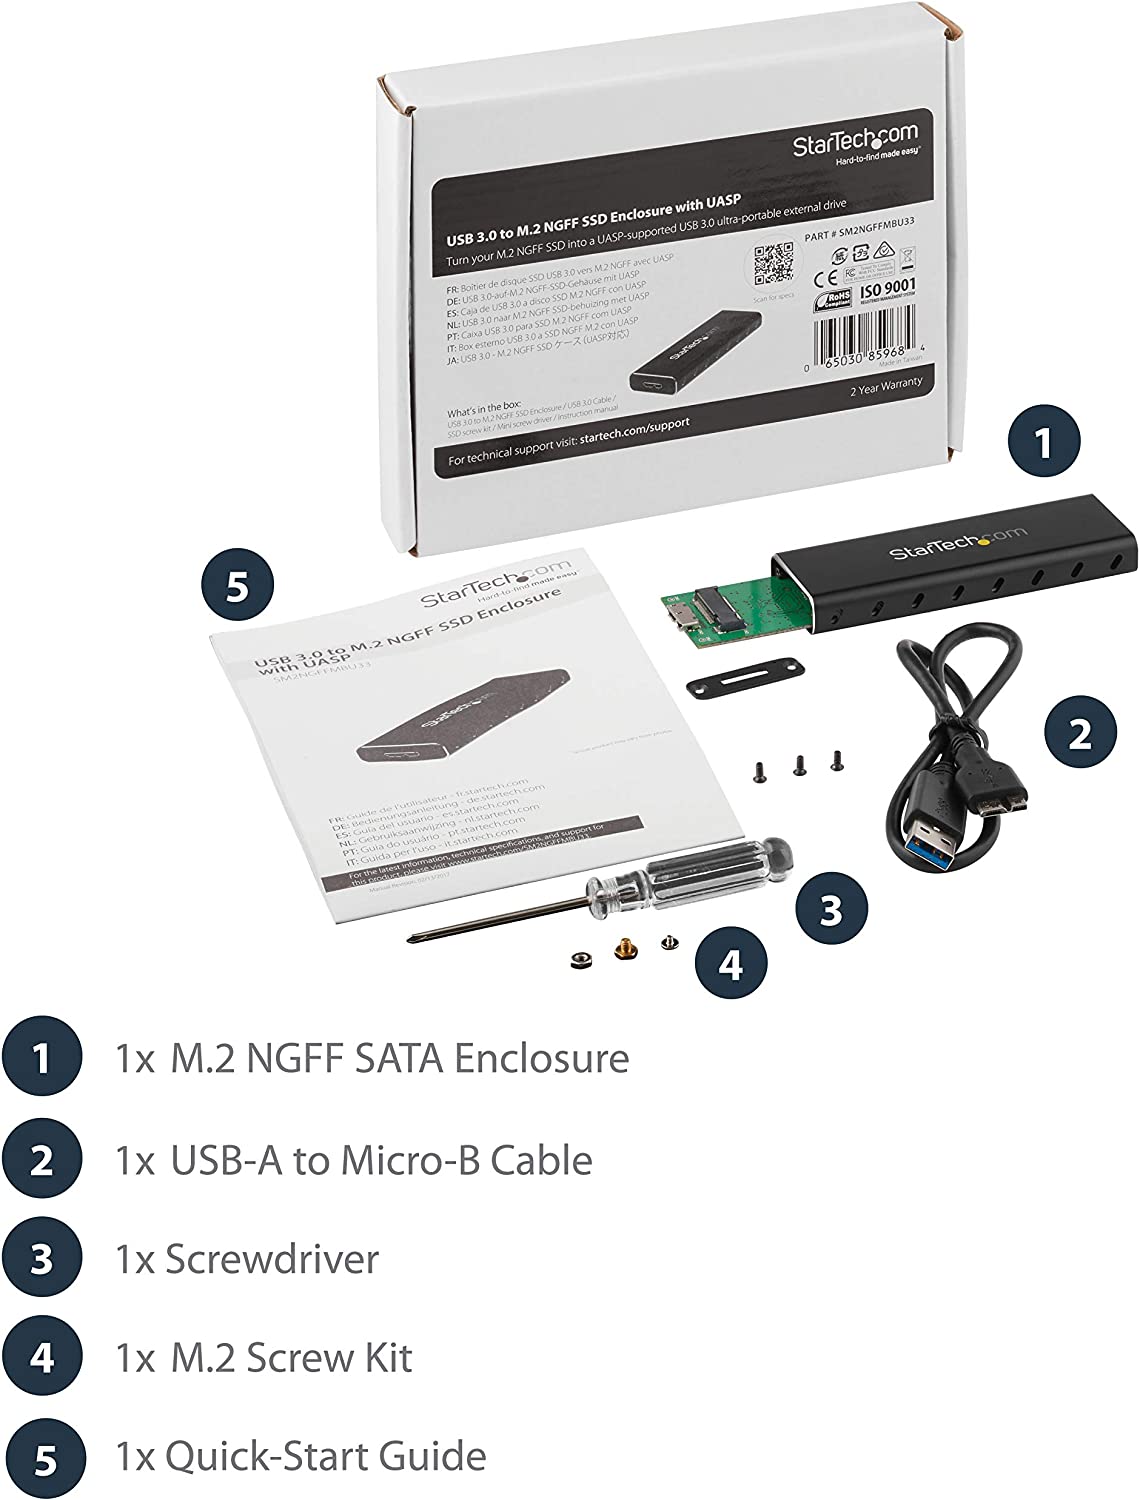 StarTech.com M.2 SSD Aluminum Enclosure to USB 3.0 (5Gbps) with UASP - M.2 NGFF SATA with B Key &amp; B+M Key - External M.2 Portable Enclosure (SM2NGFFMBU33), Black USB-A M.2 SATA